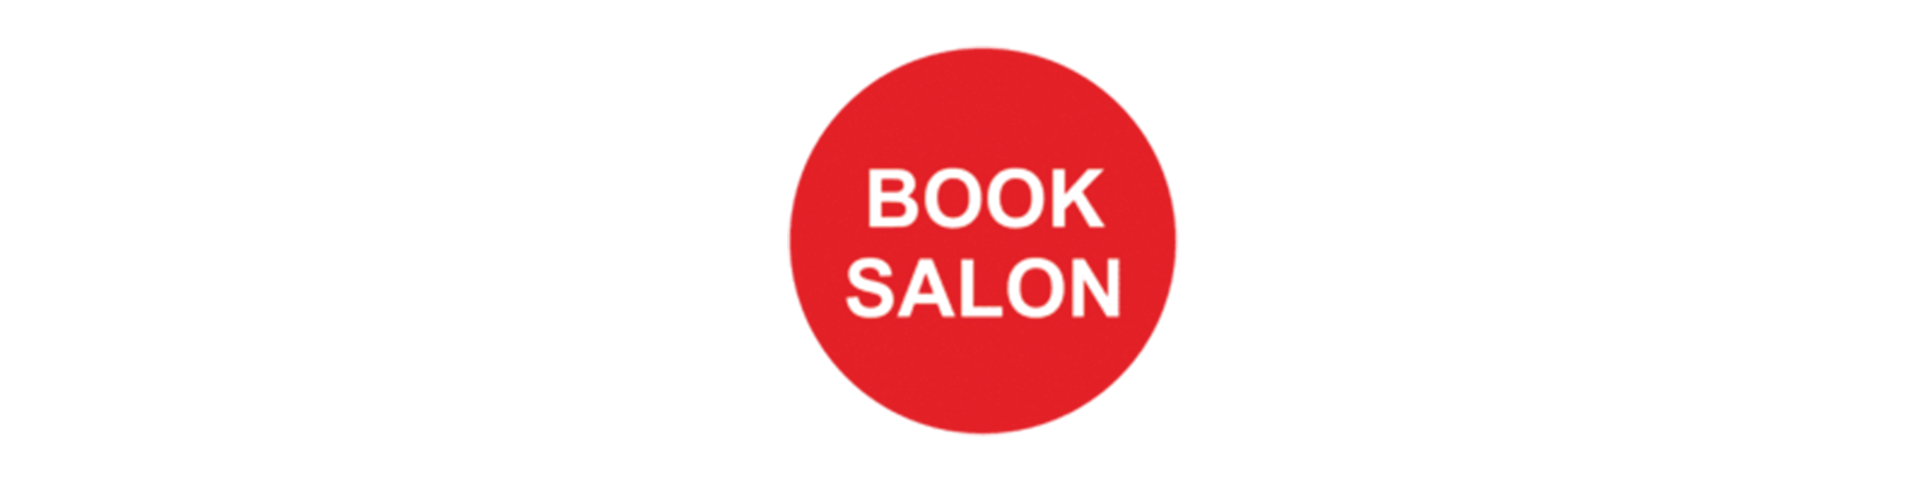 book-salon